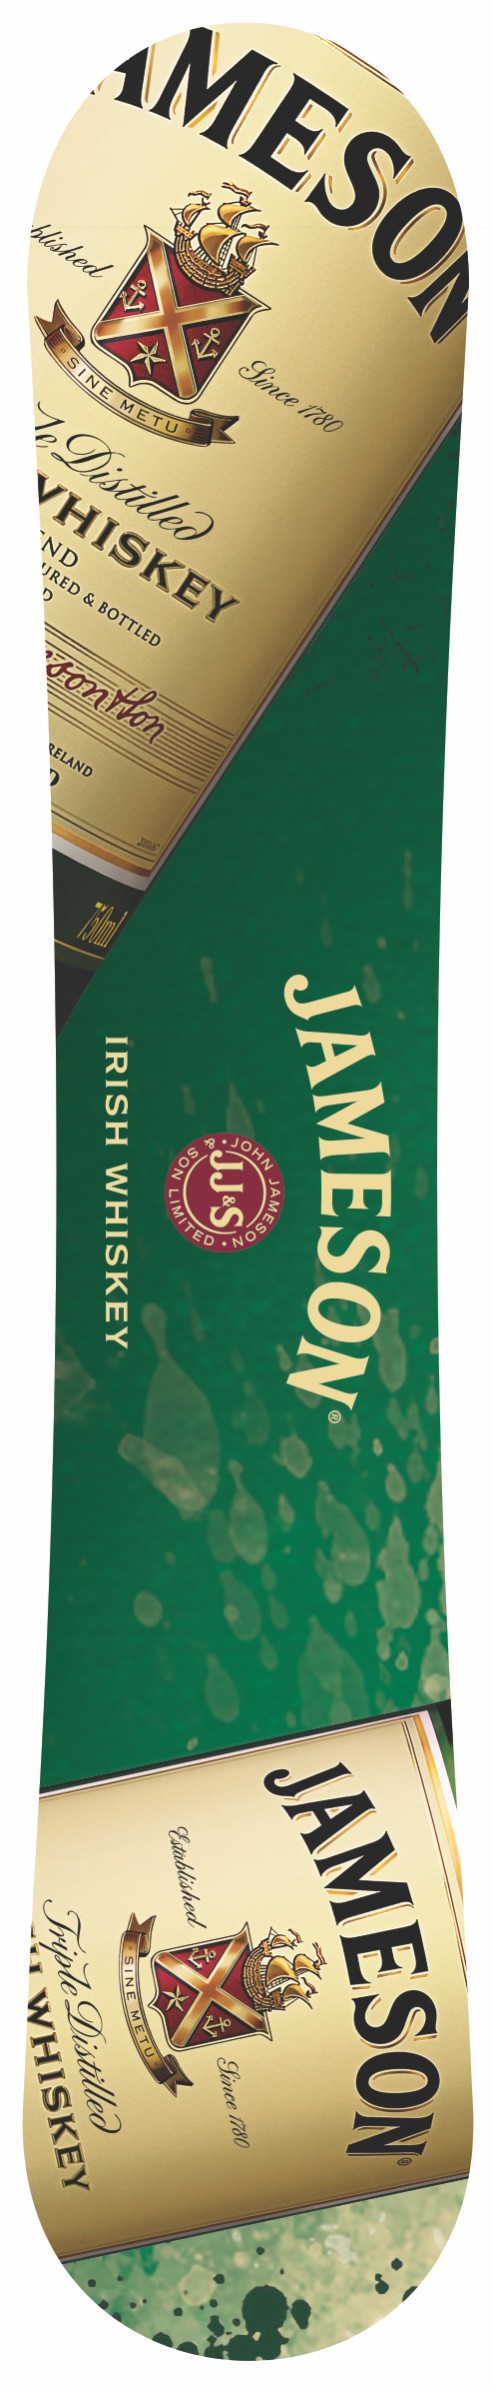 Jameson Snowboard - Bottles.jpg